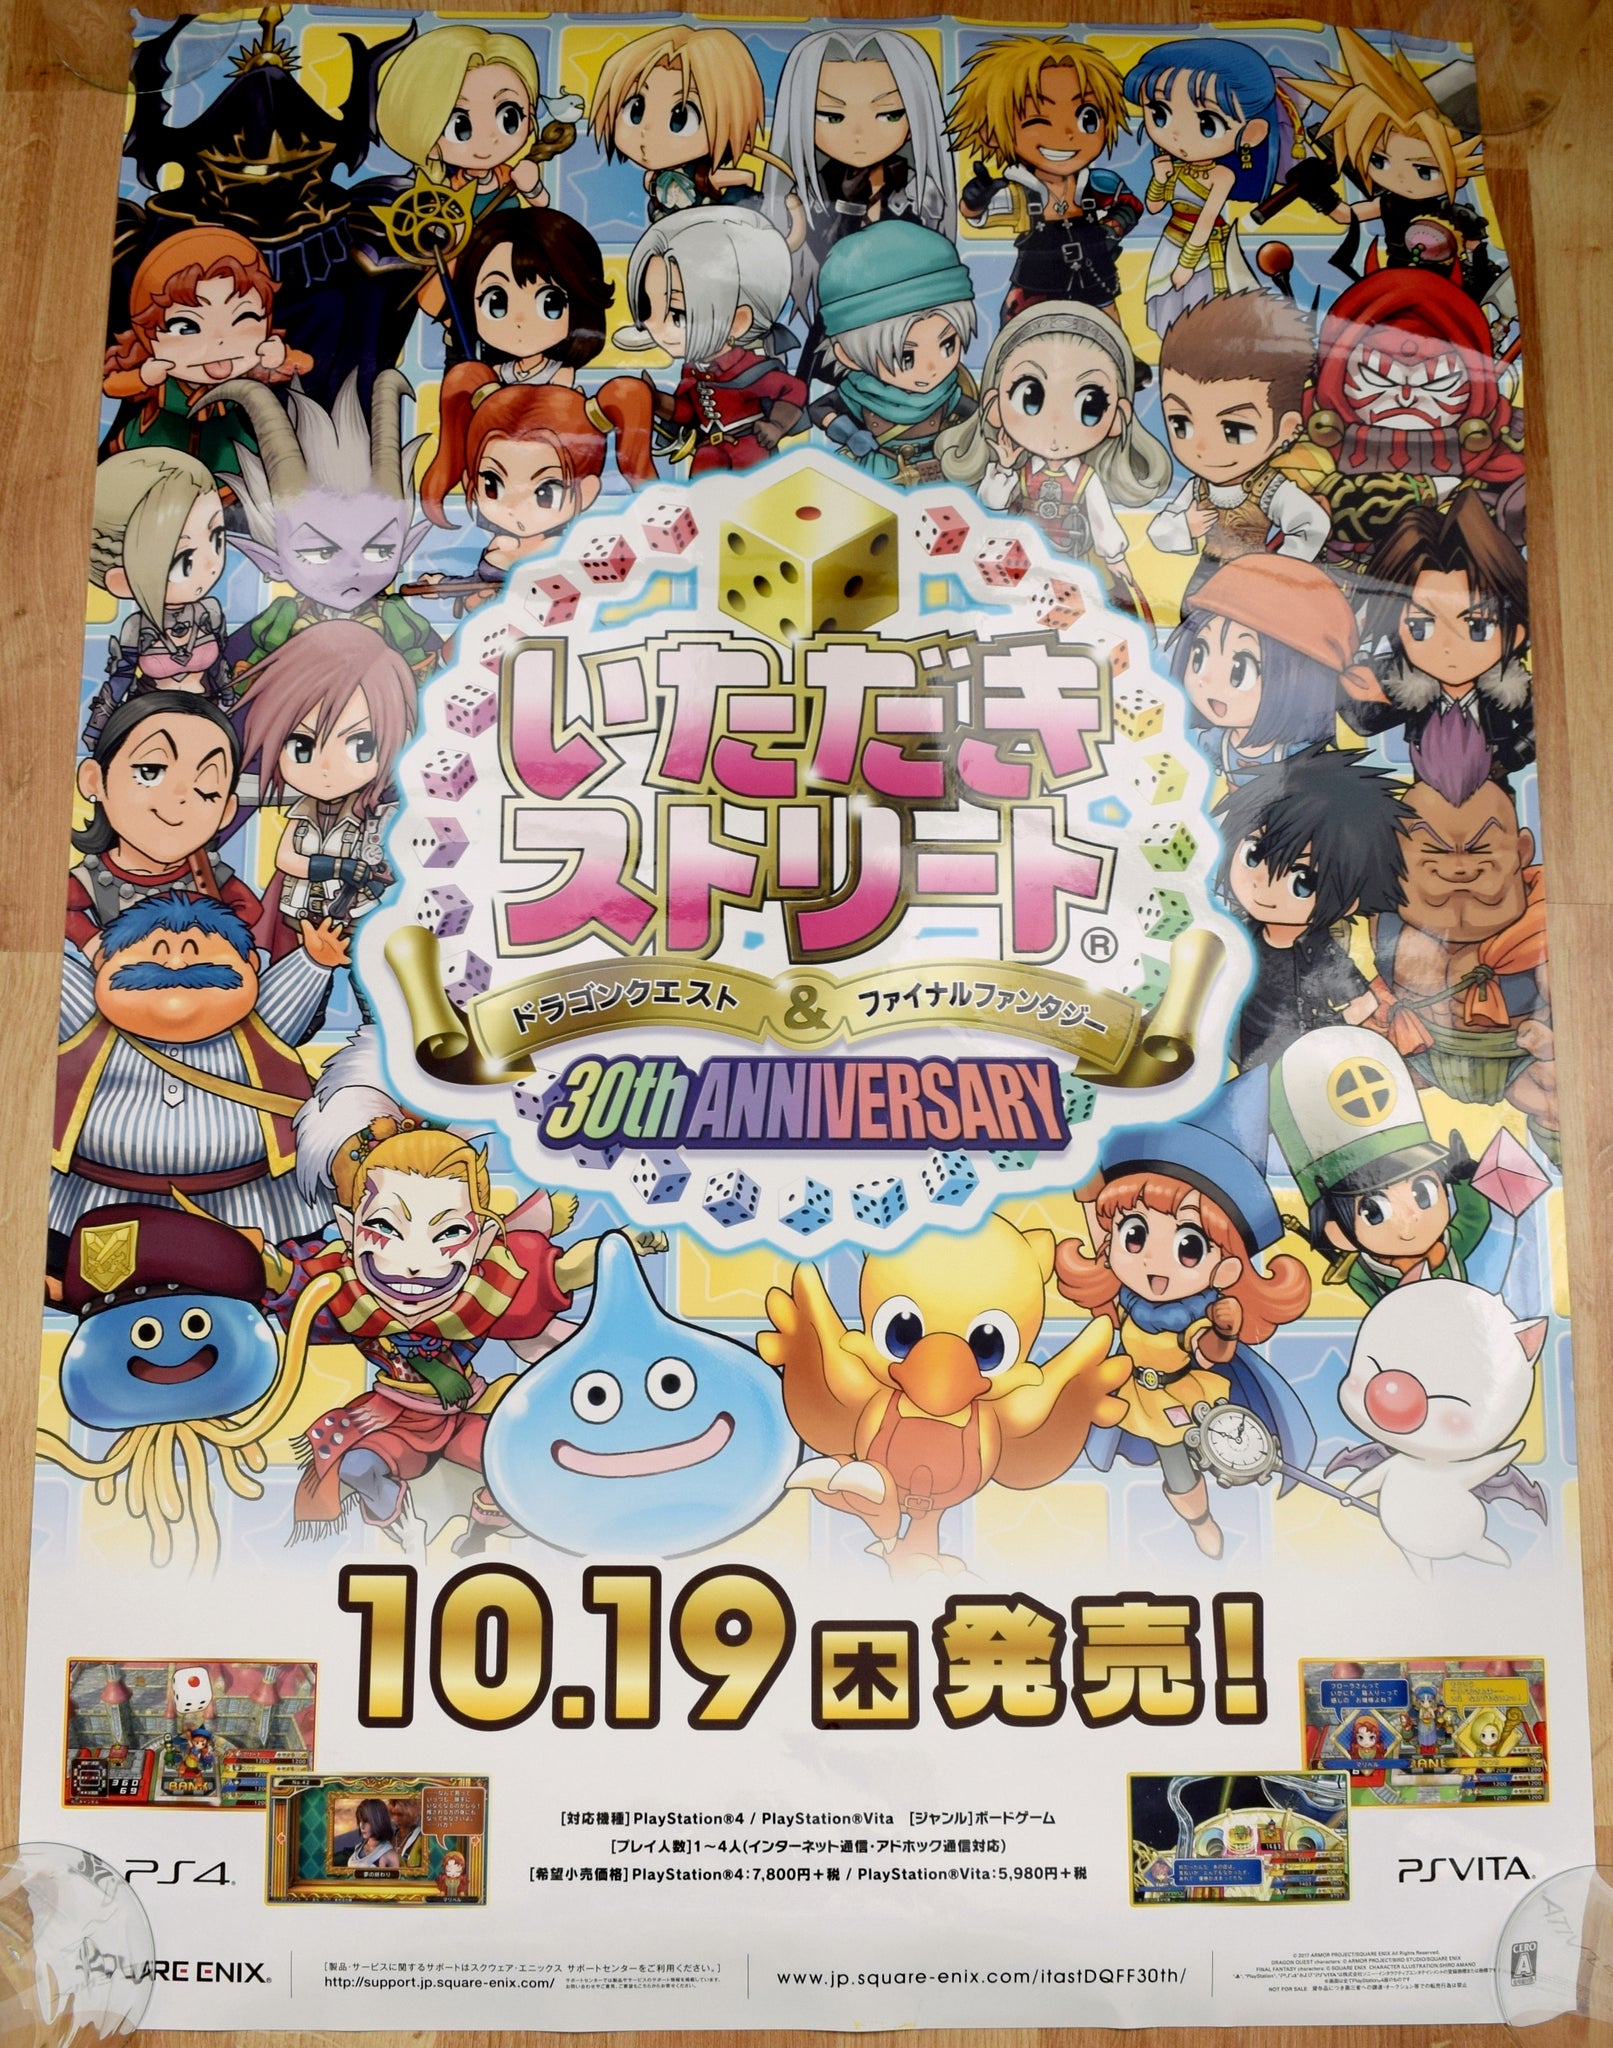 Itadaki Street Dragon Quest Final Fantasy (B2) Japanese Promotional Poster